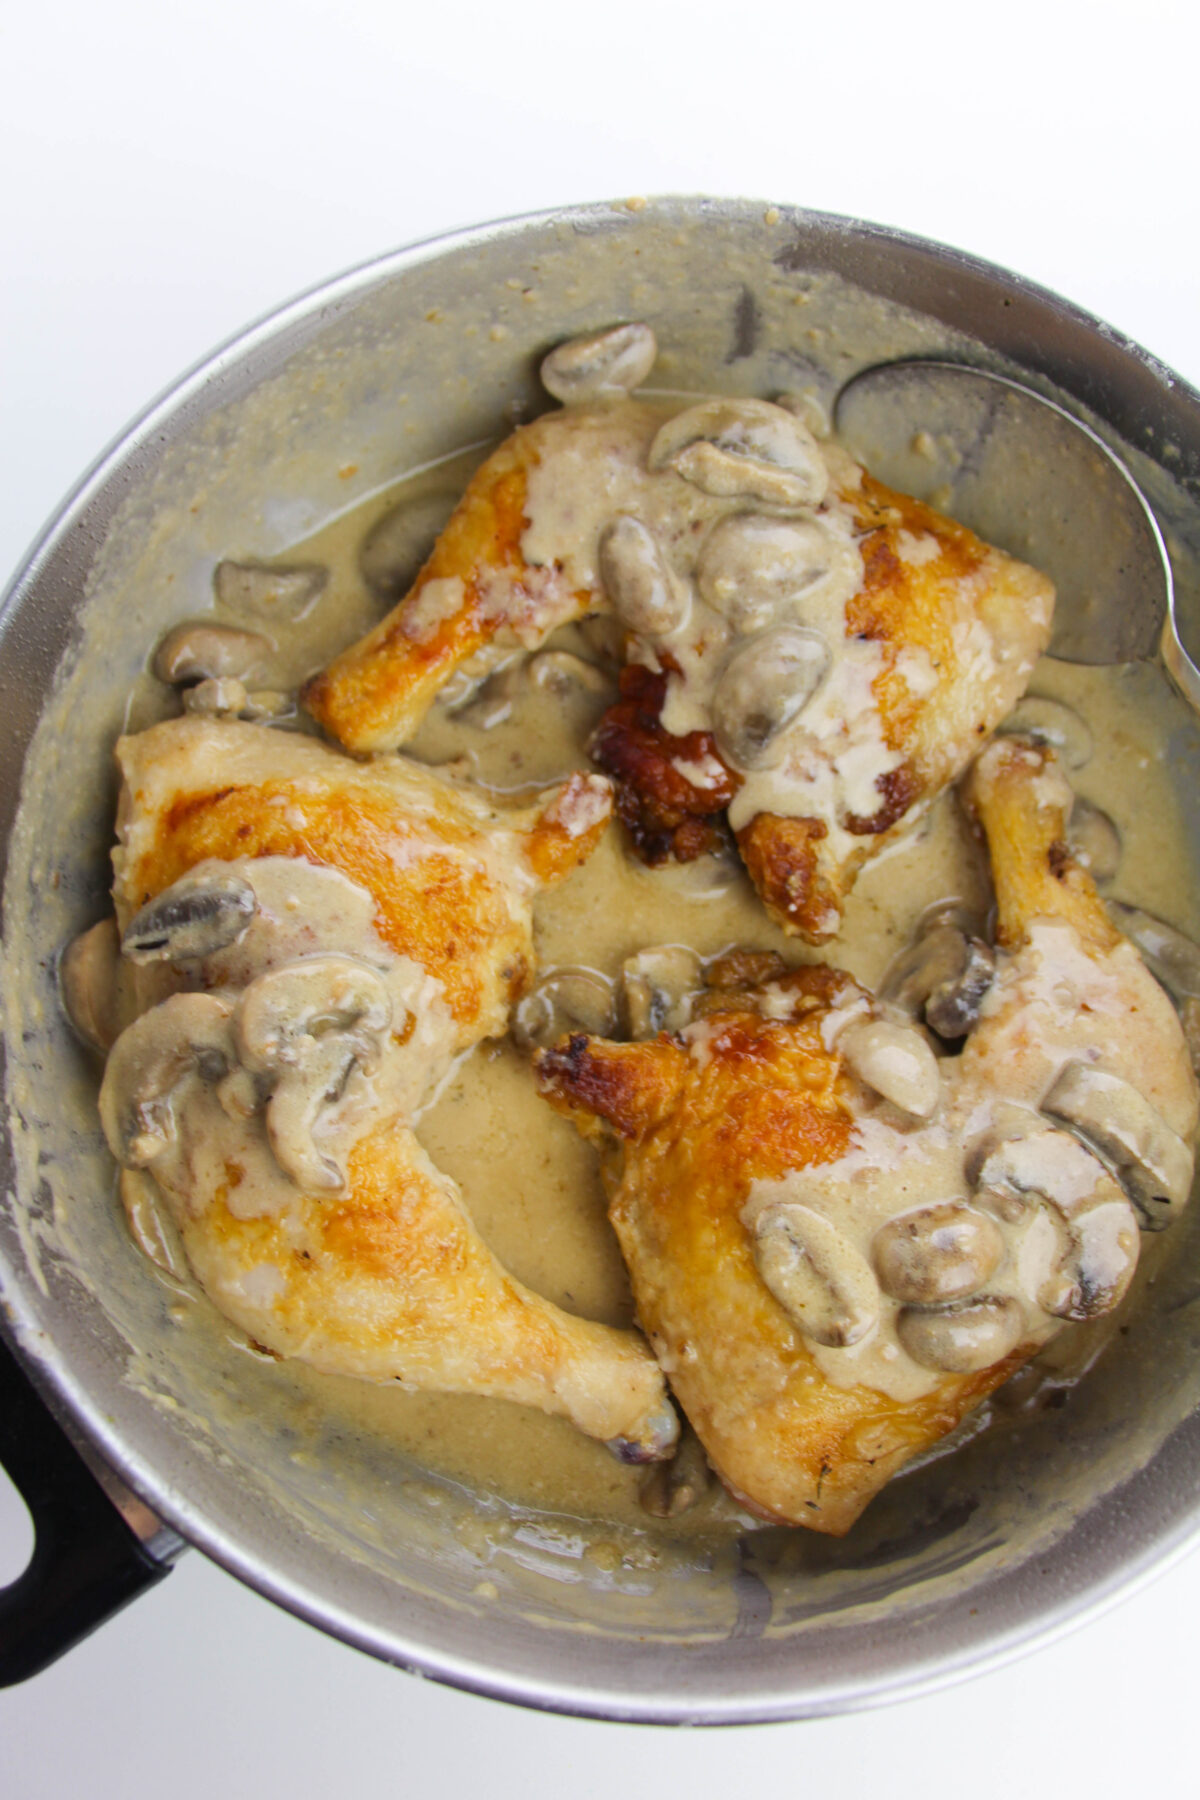 Pan fried chicken and creamy mushroom sauce.